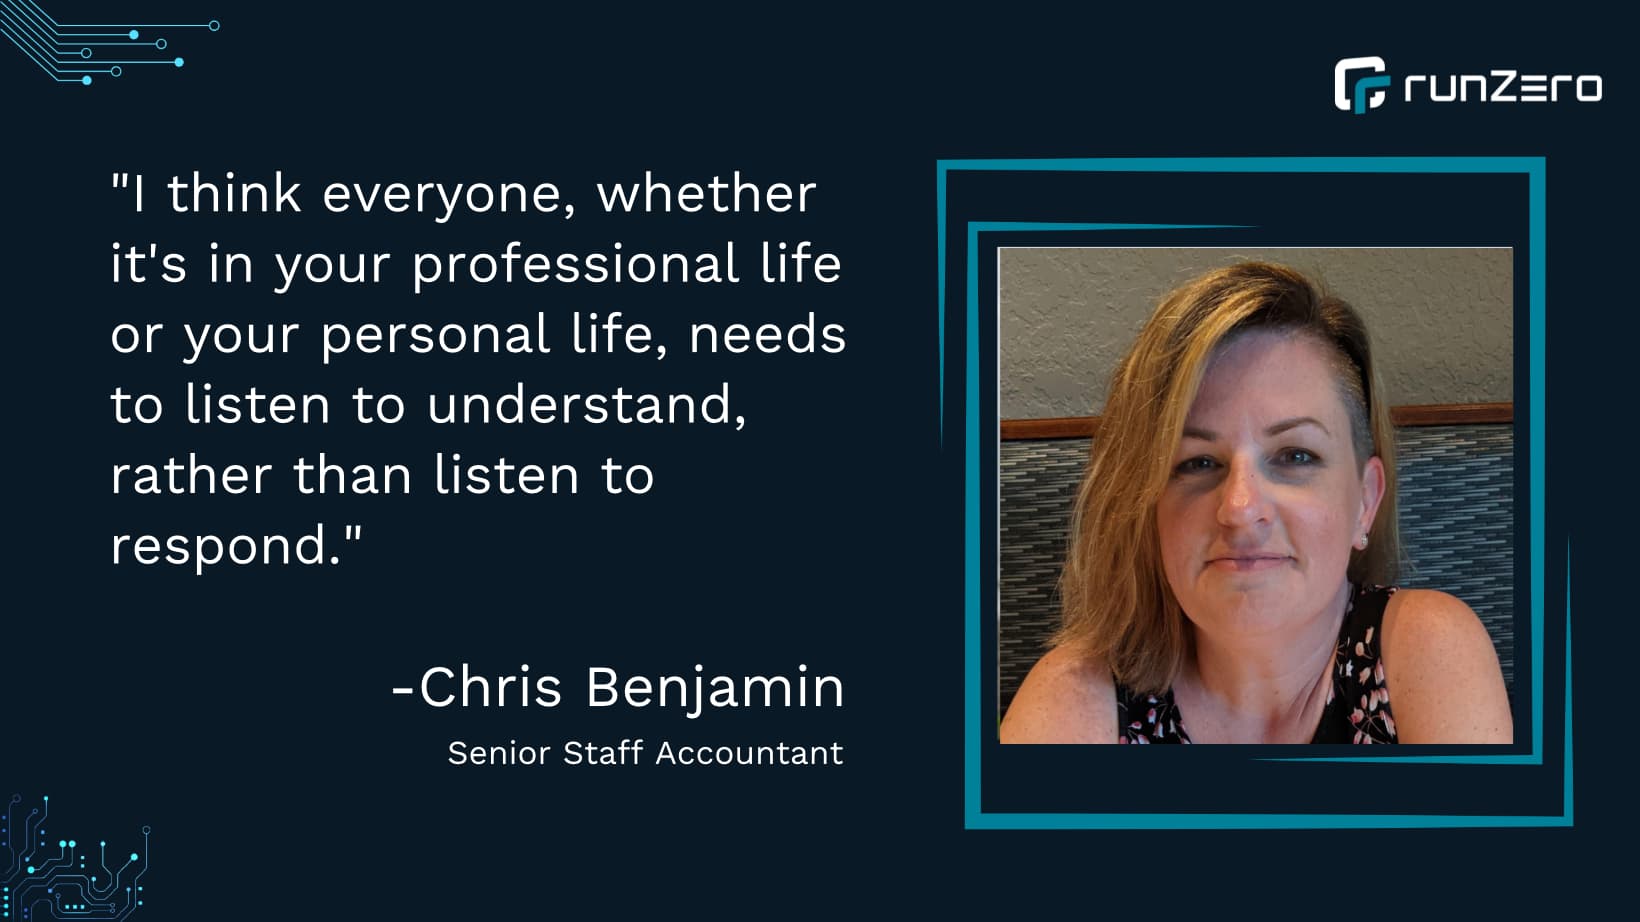 Employee Spotlight: Chris Benjamin